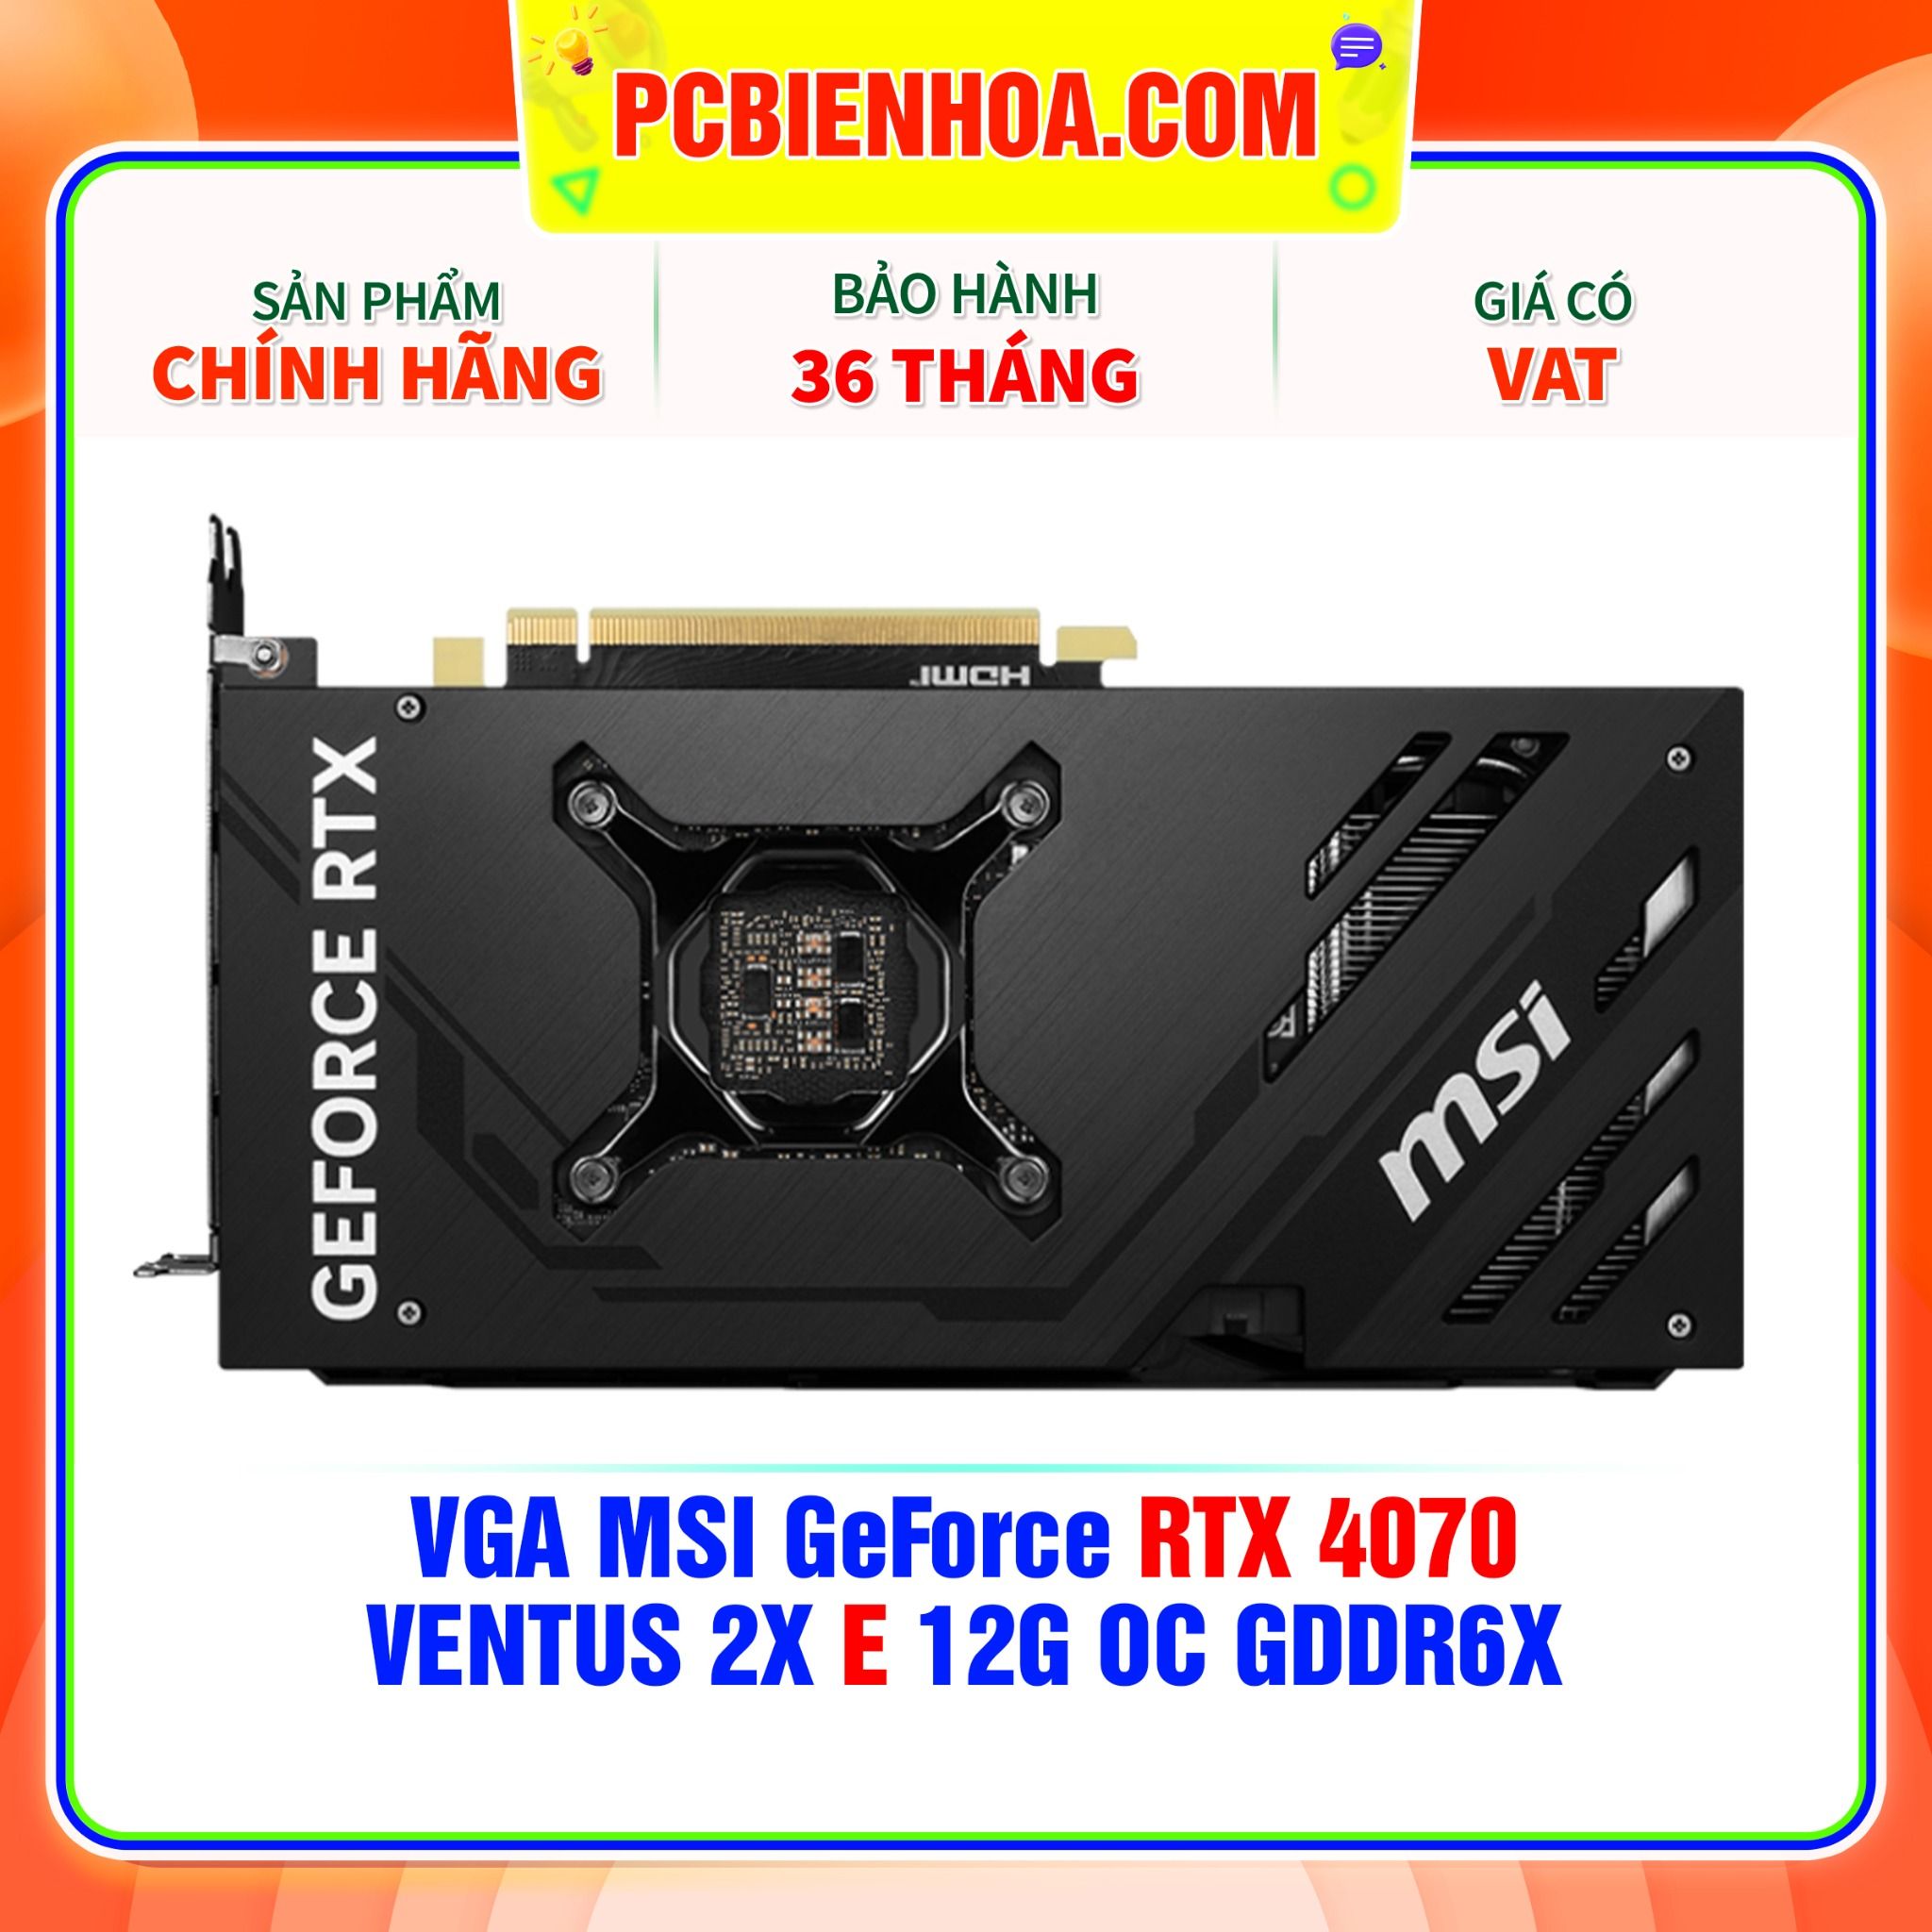  VGA MSI GeForce RTX 4070 VENTUS 2X E 12G OC GDDR6X 